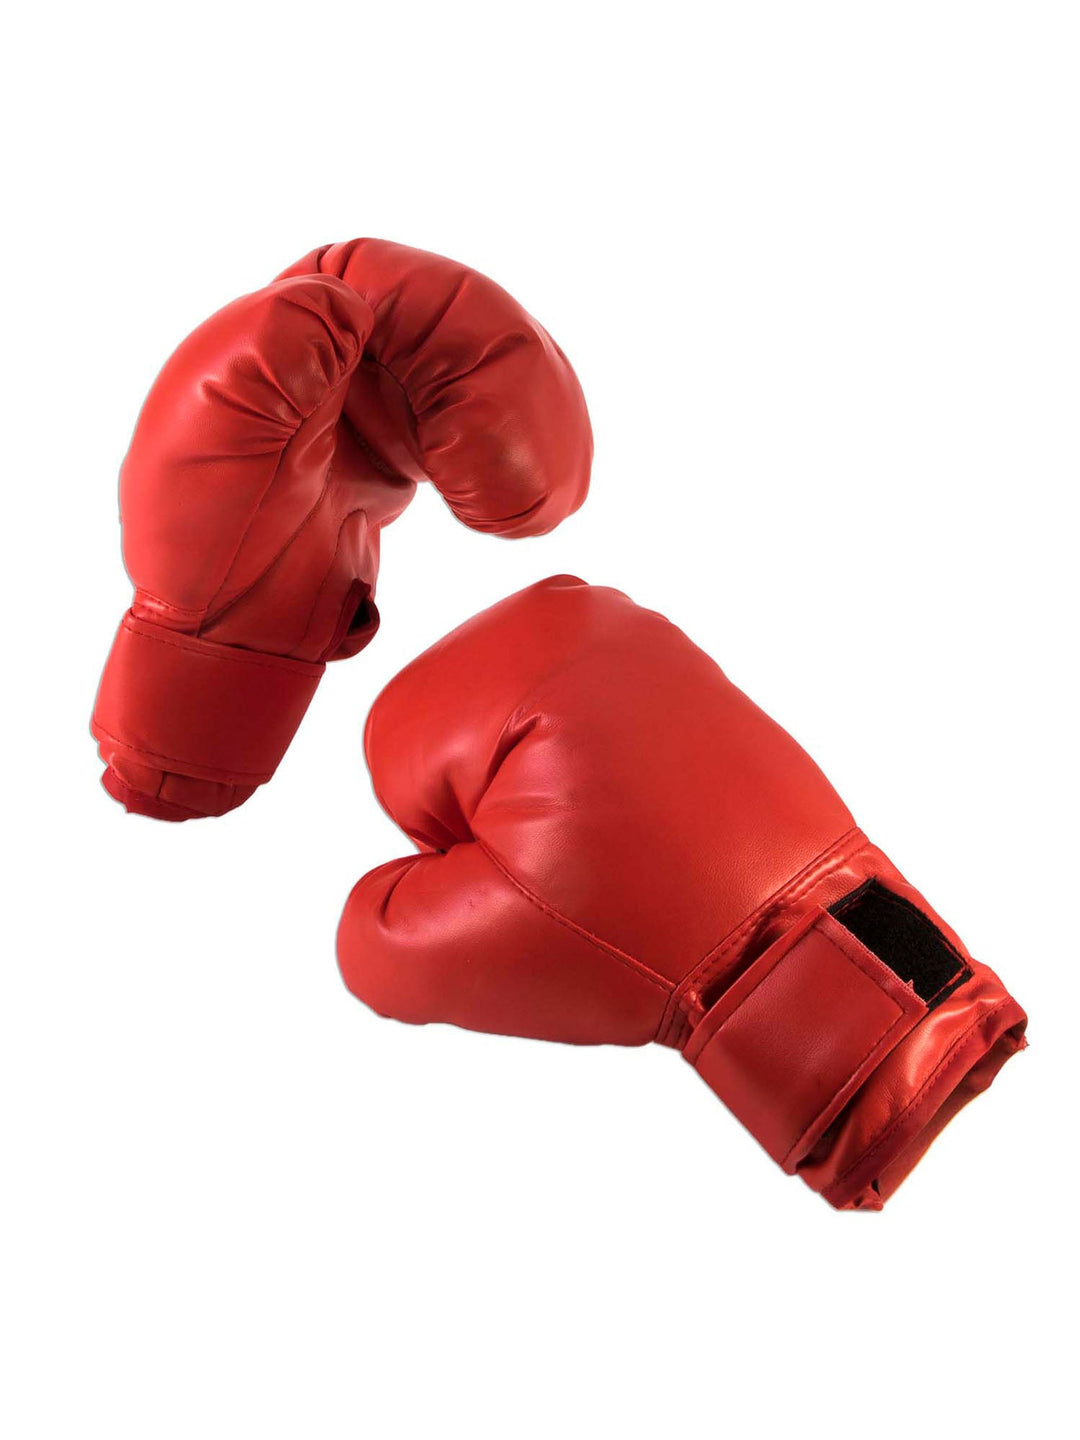 Adult Boxing Gloves Joke Costume Accessory_1